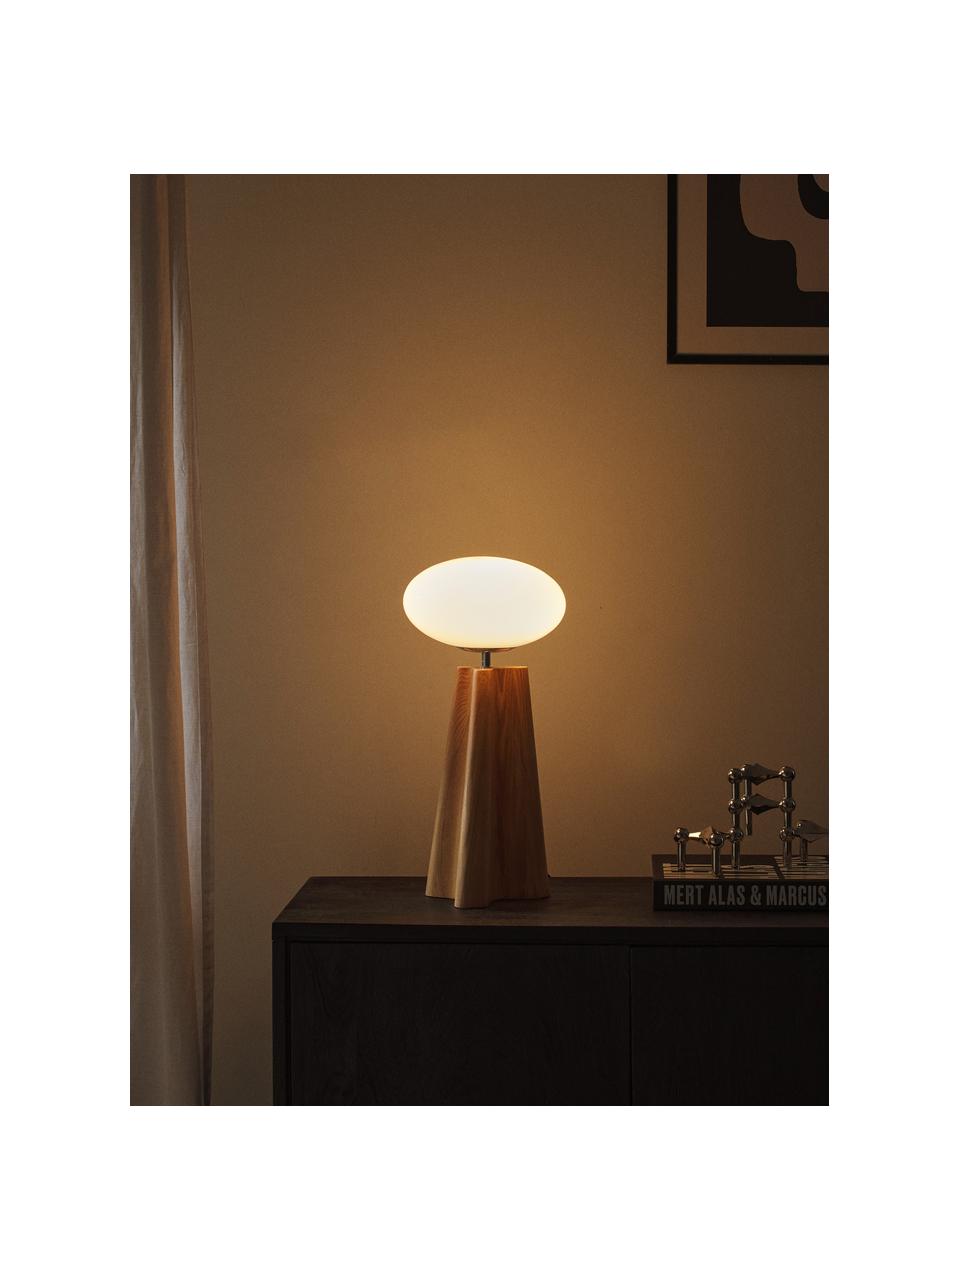 Tafellamp Aino van essenhout, Lampenkap: glas, Lampvoet: essenhout, Licht hout, wit, Ø 23 x H 48 cm